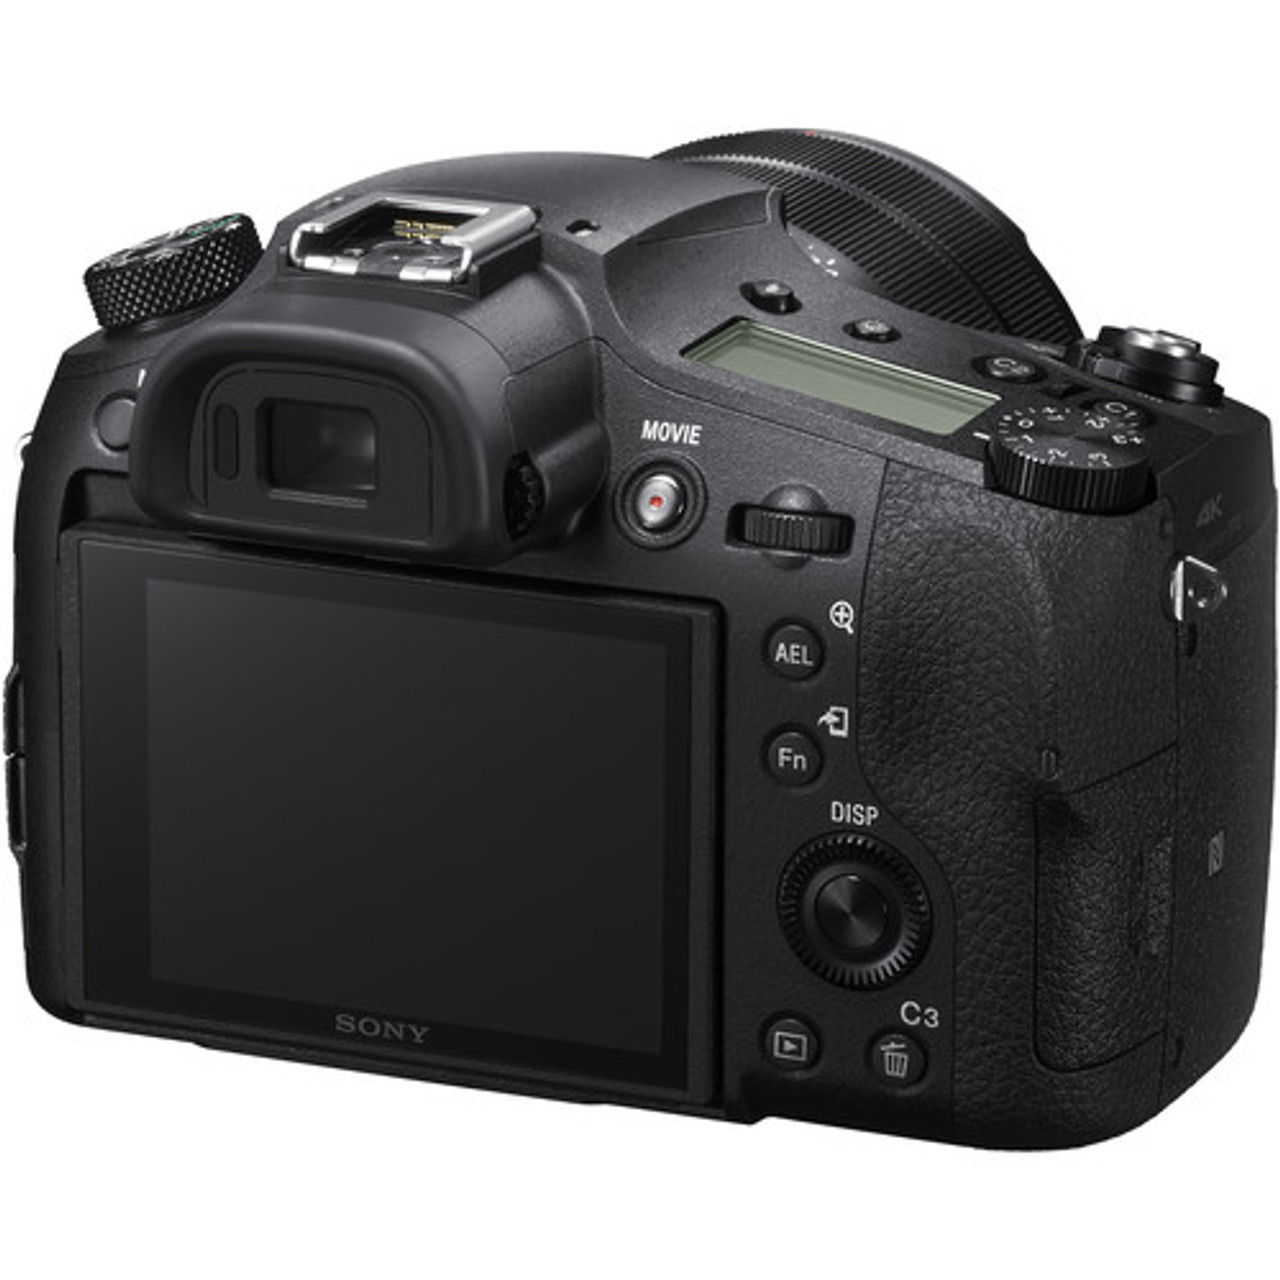 Sony Cyber-shot DSC-RX10 IV Digital Camera | Bedfords.com